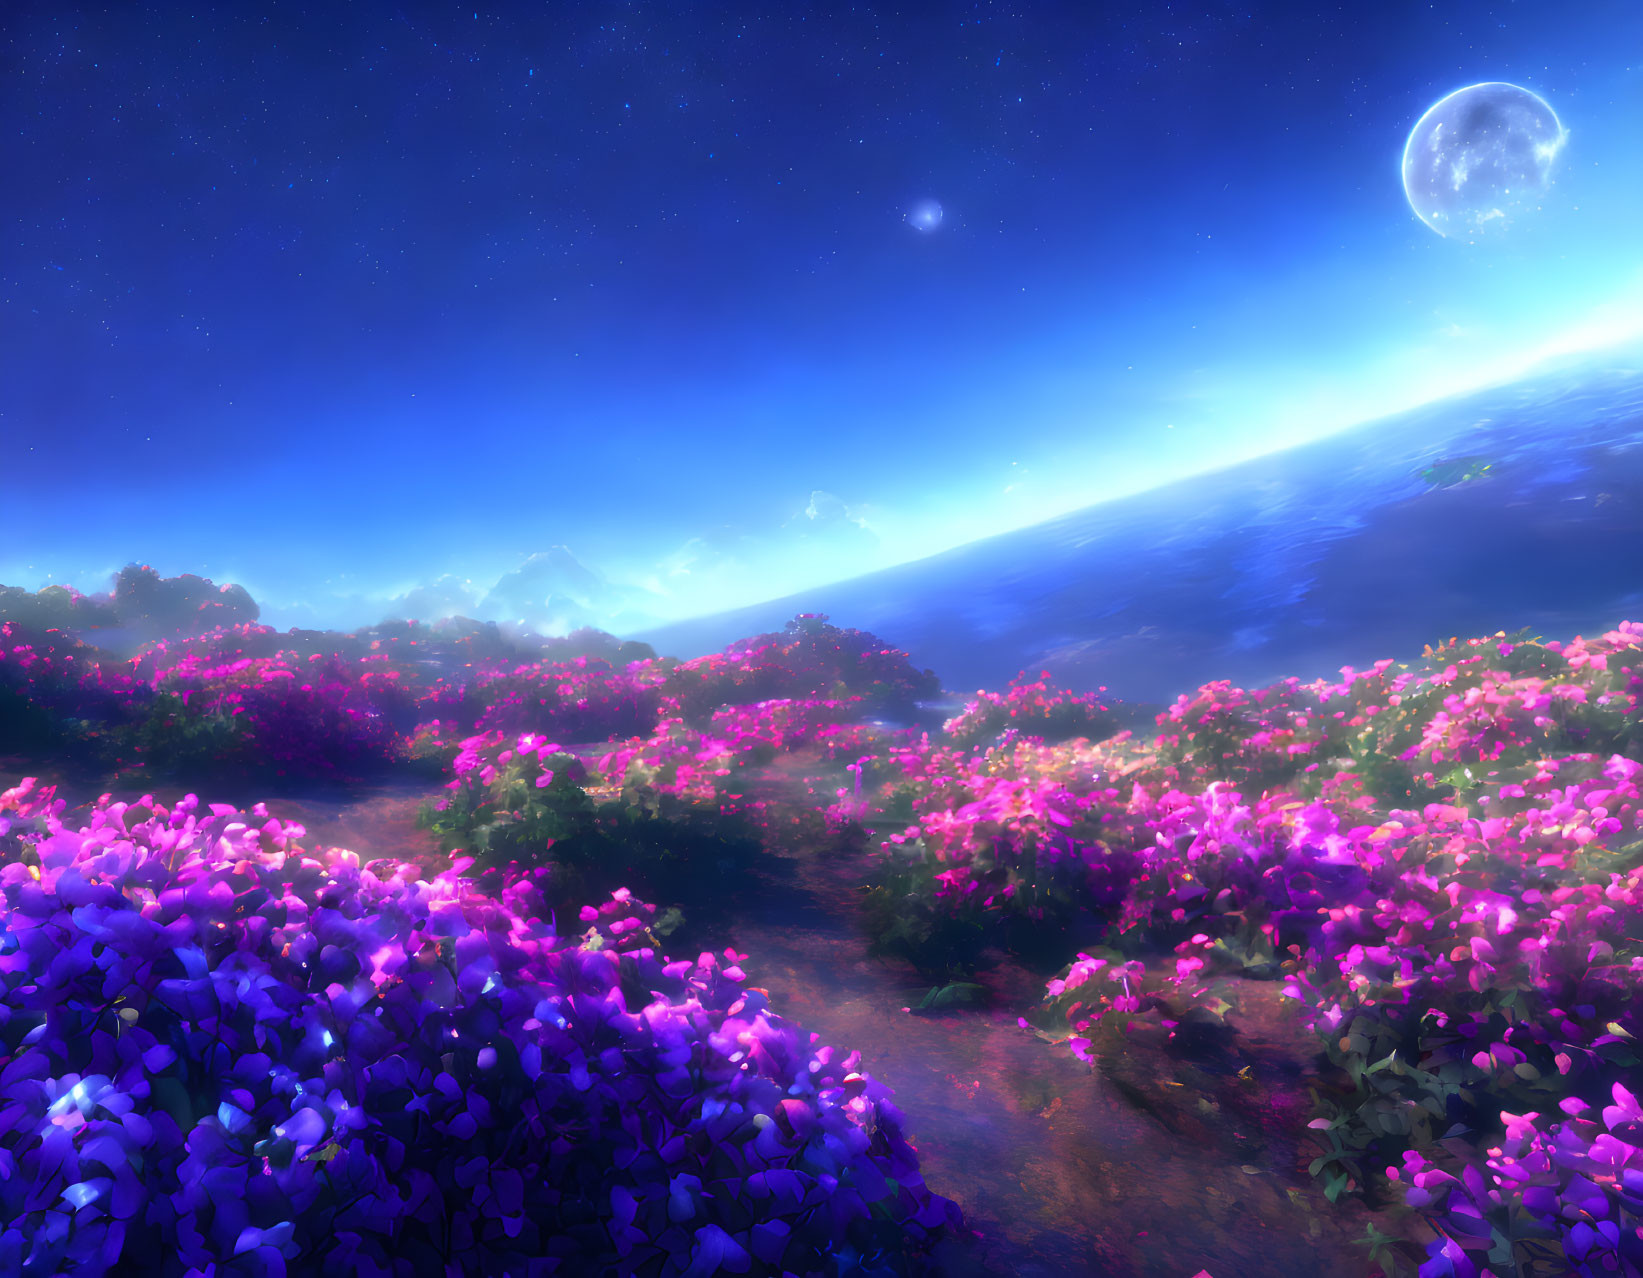 Colorful digital art: flower landscape, distant mountains, starry sky, planet, moon